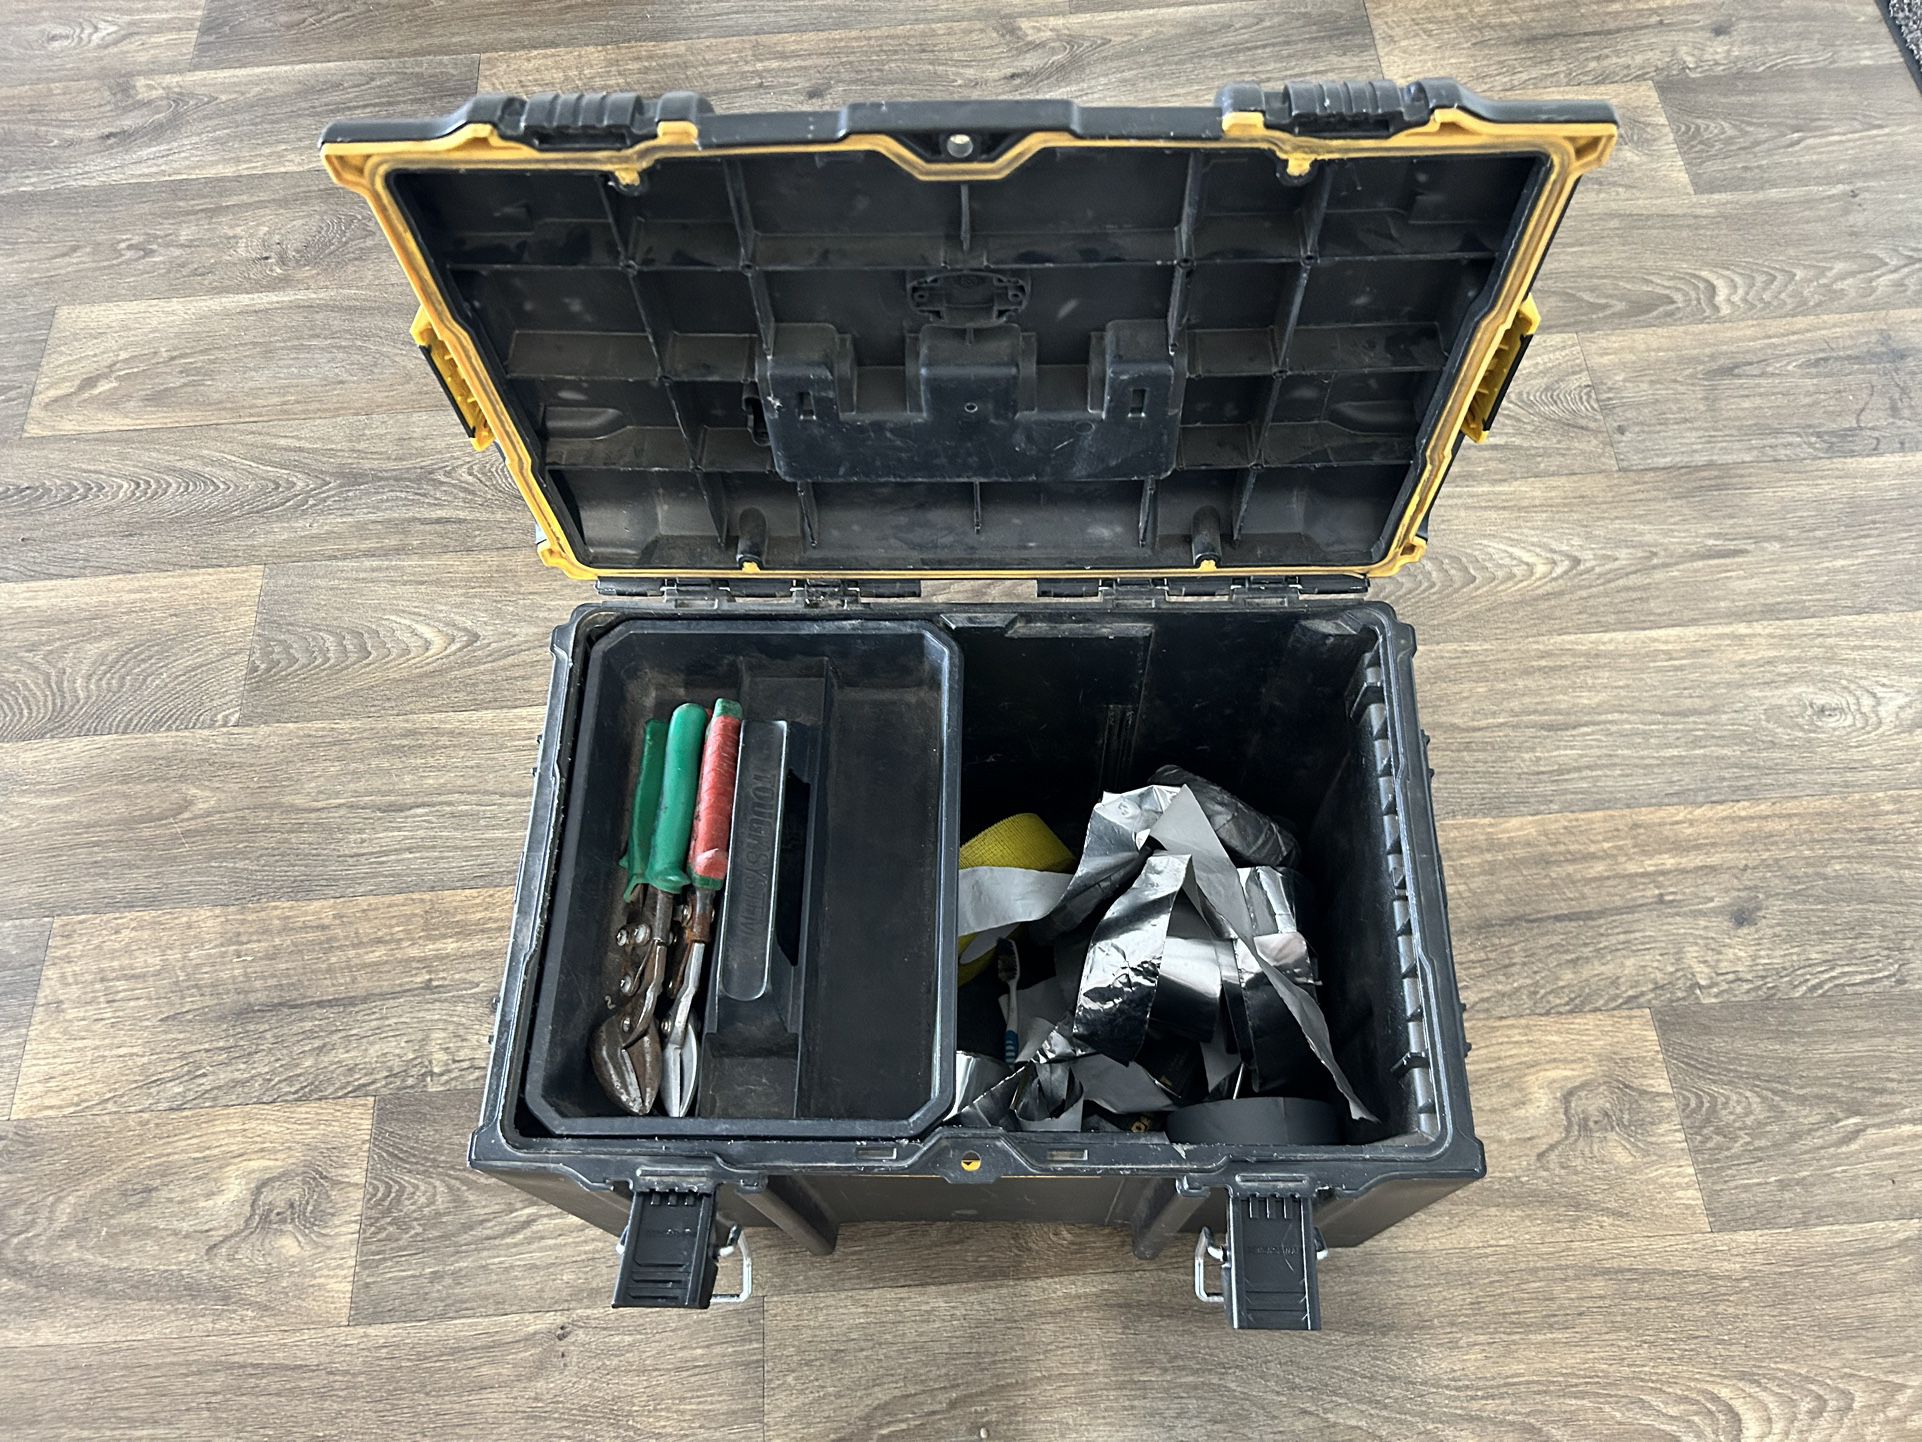 Dewalt Tool Box 